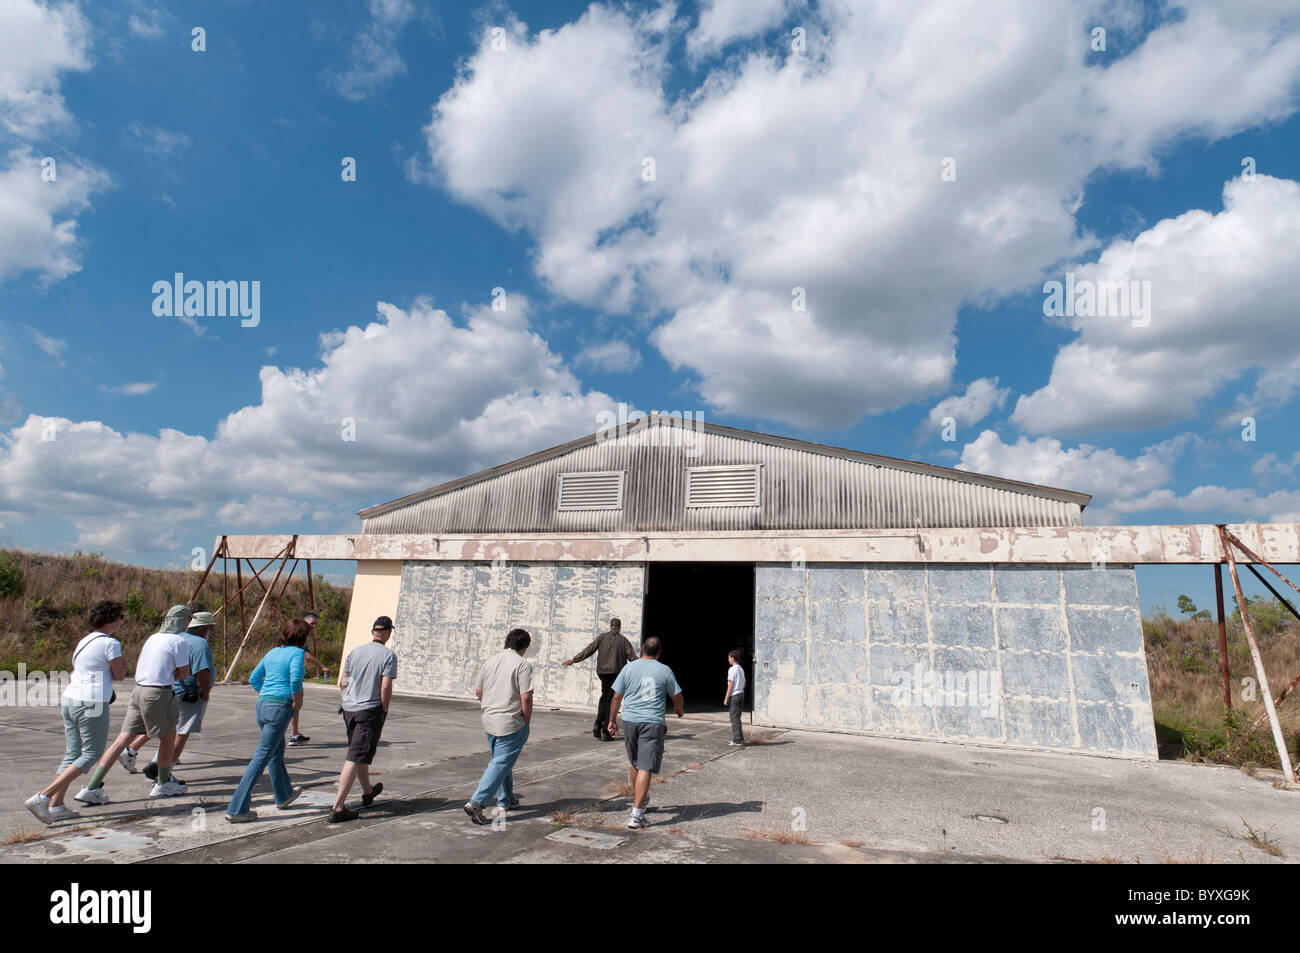 Park ranger leads tour of Nike Hercules Missile barn at Cuban Missile Crisis era site, Everglades National Park, Florida Stock Photo